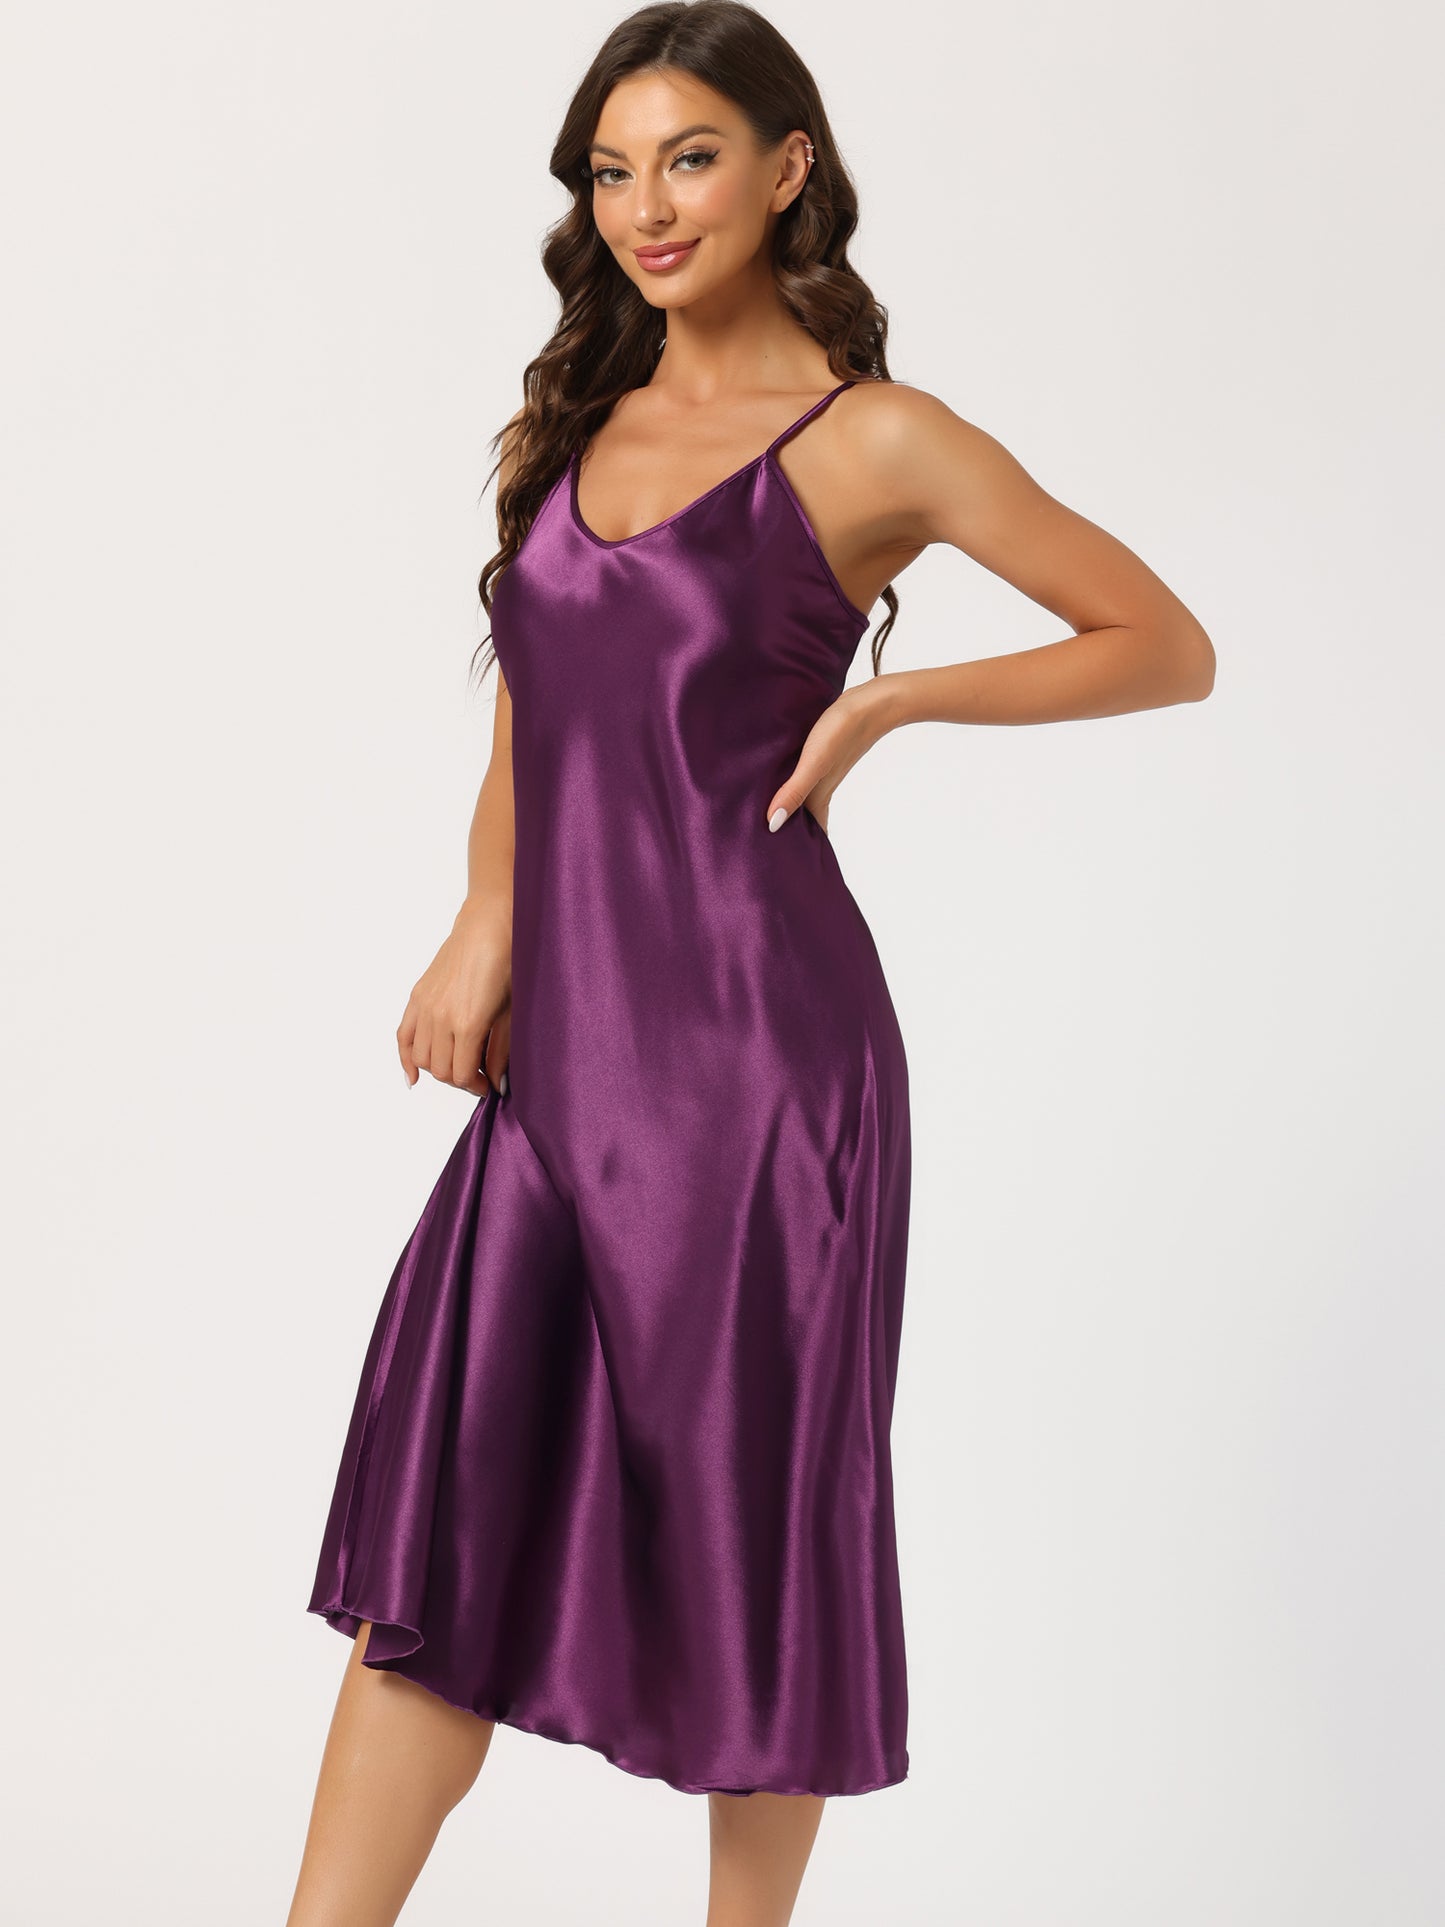 cheibear Satin Pajama Nightdress Nightshirt Sleepwear V-Neck Lounge Nightgown Purple